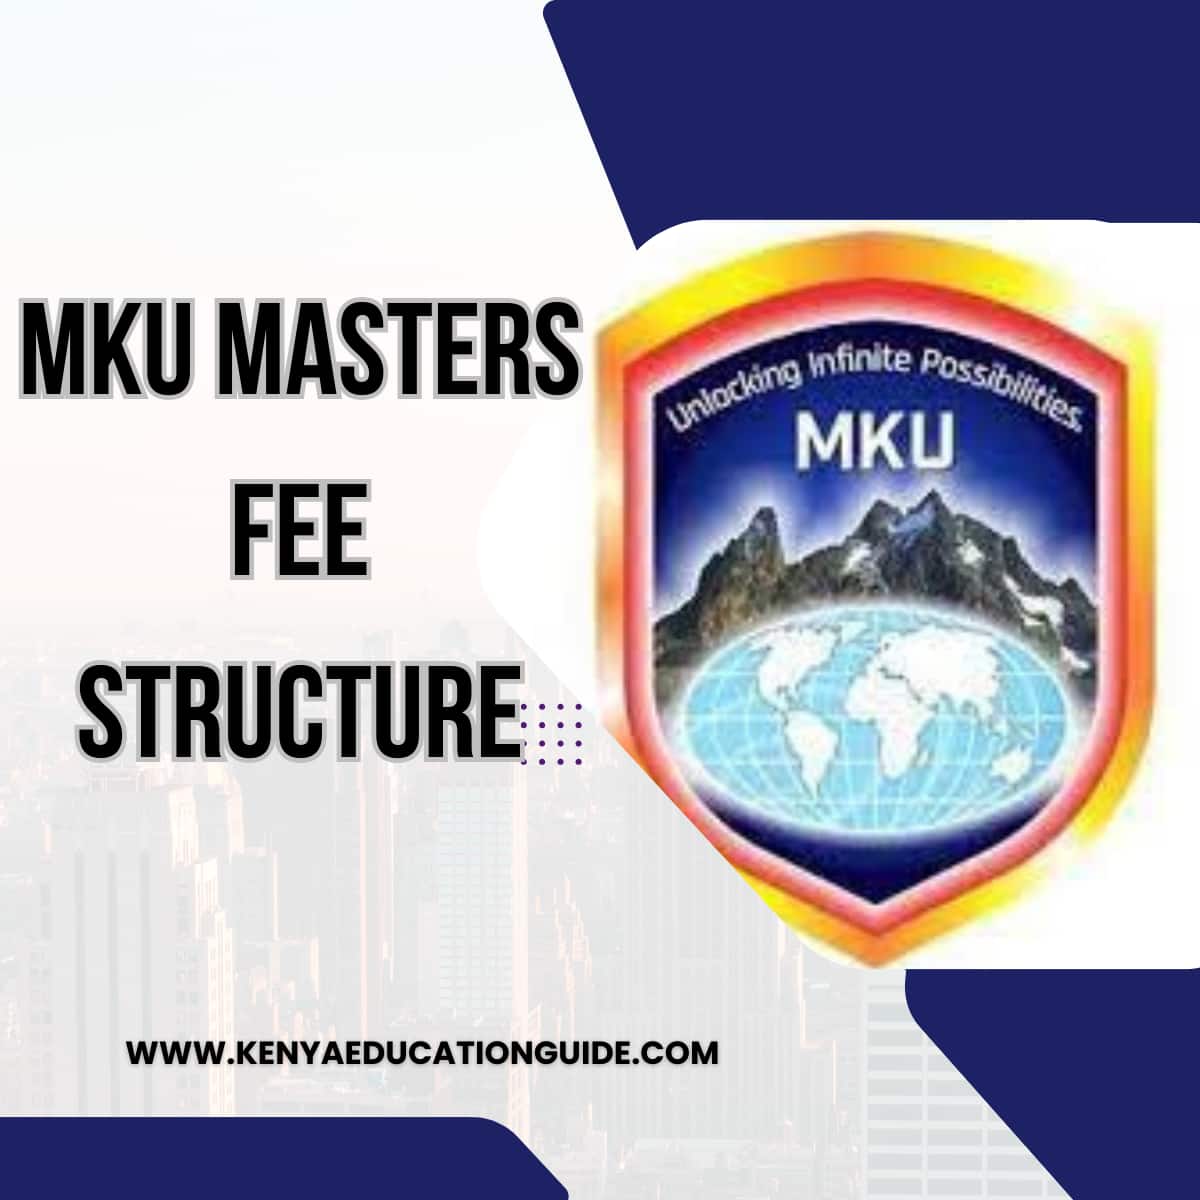 MKU Masters Fee Structure